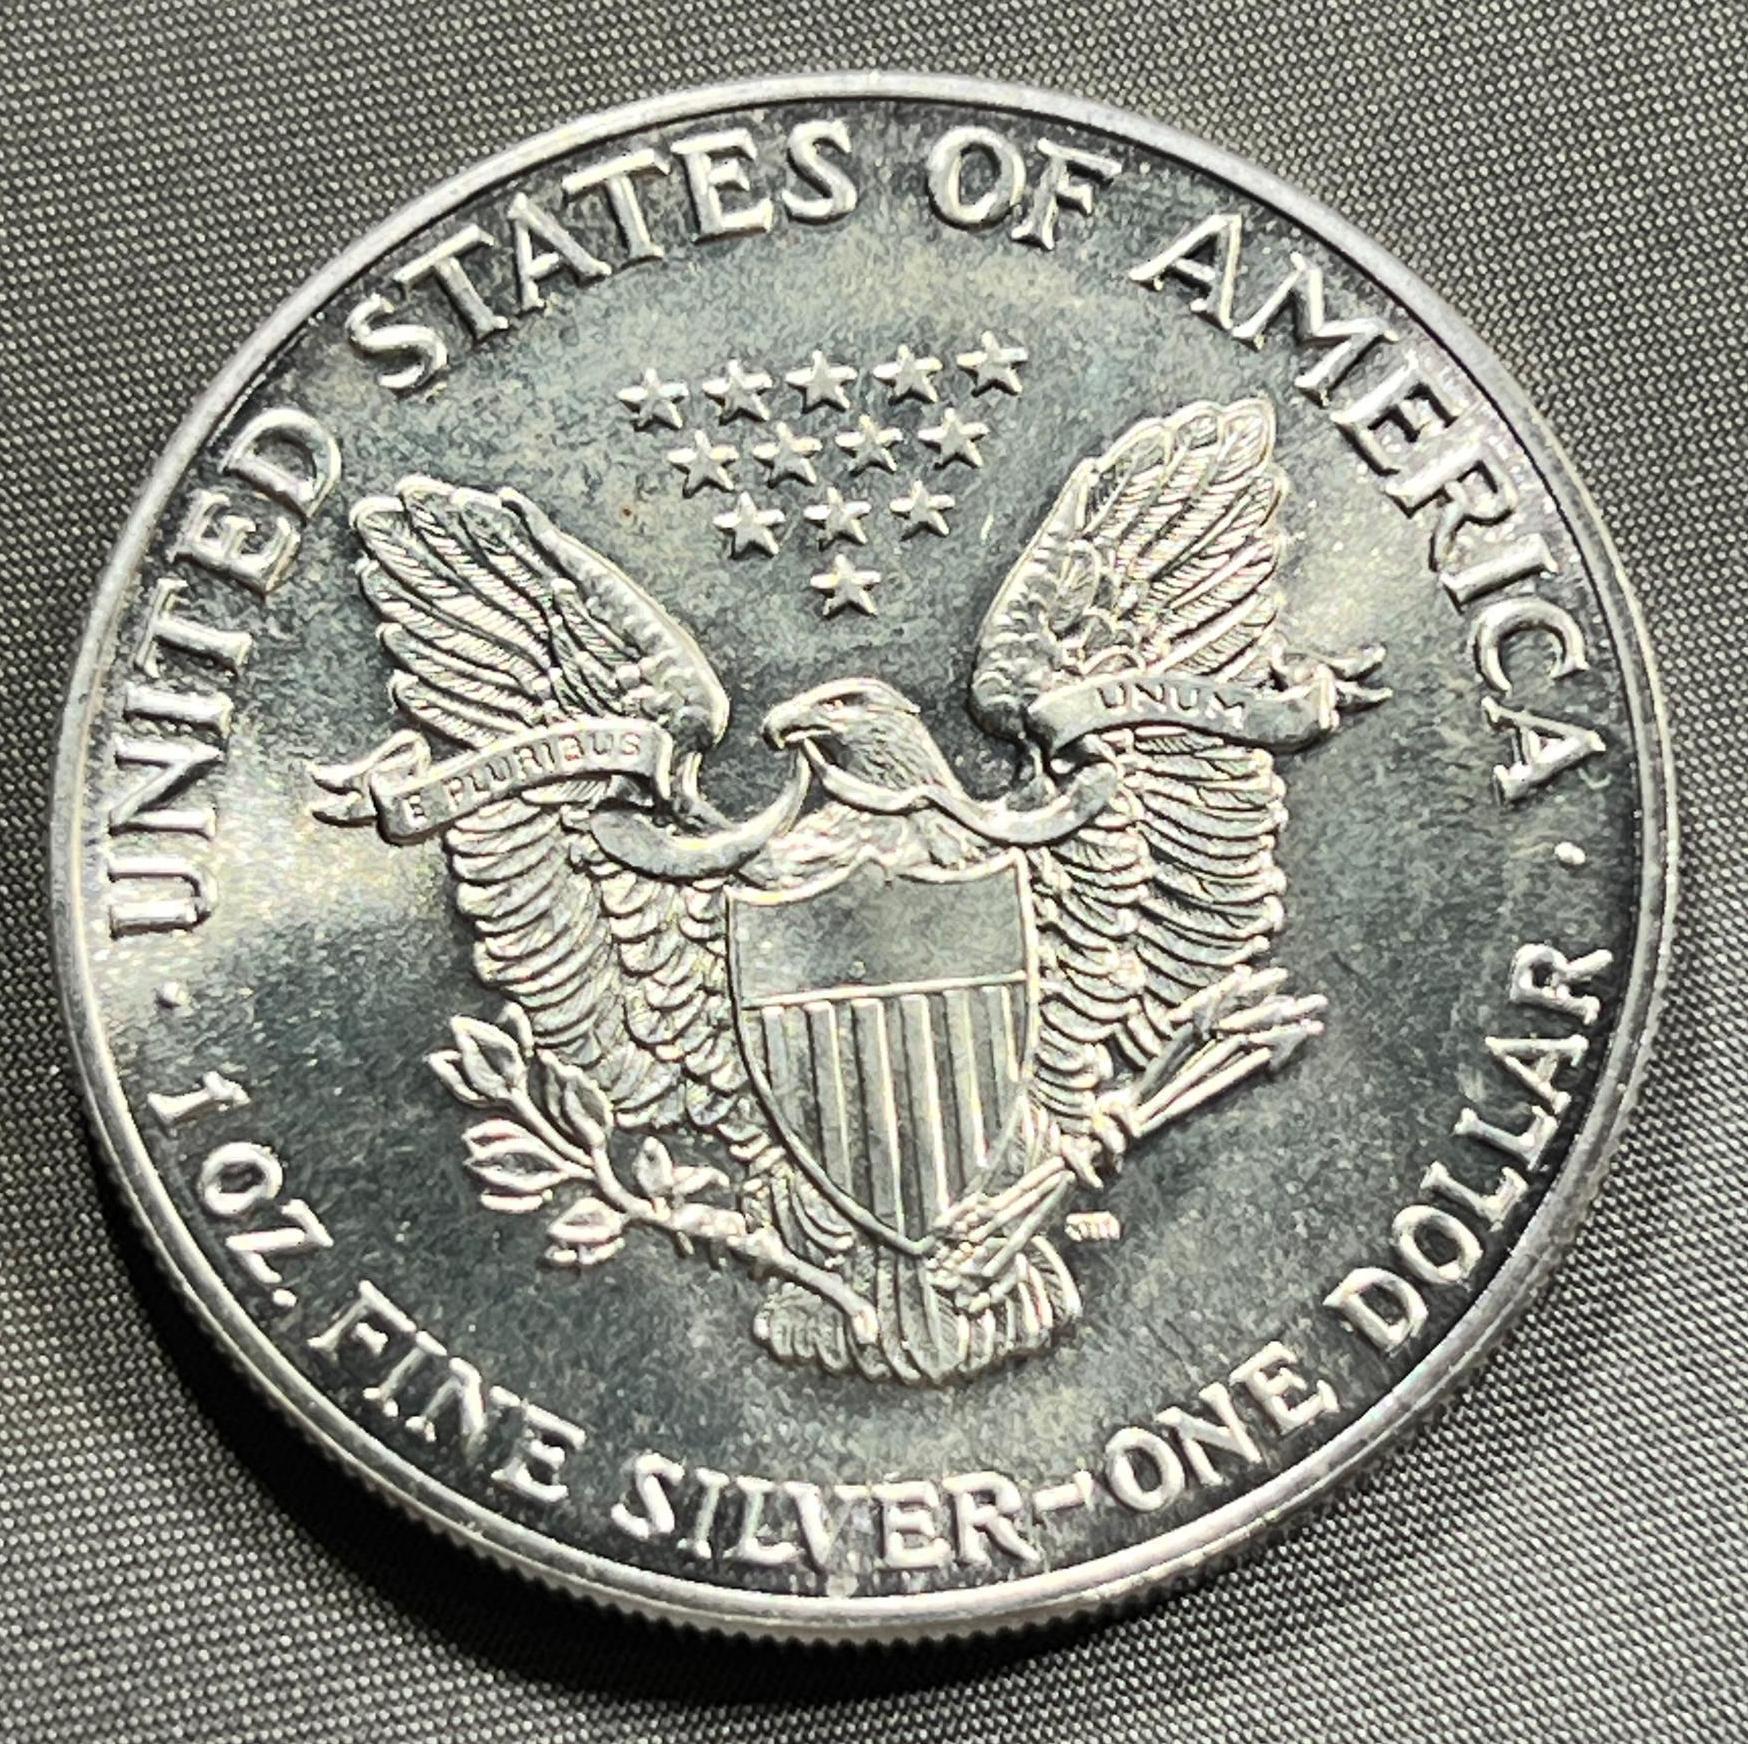 1988 US Silver Eagle Dollar Coin, .999 Fine Silver